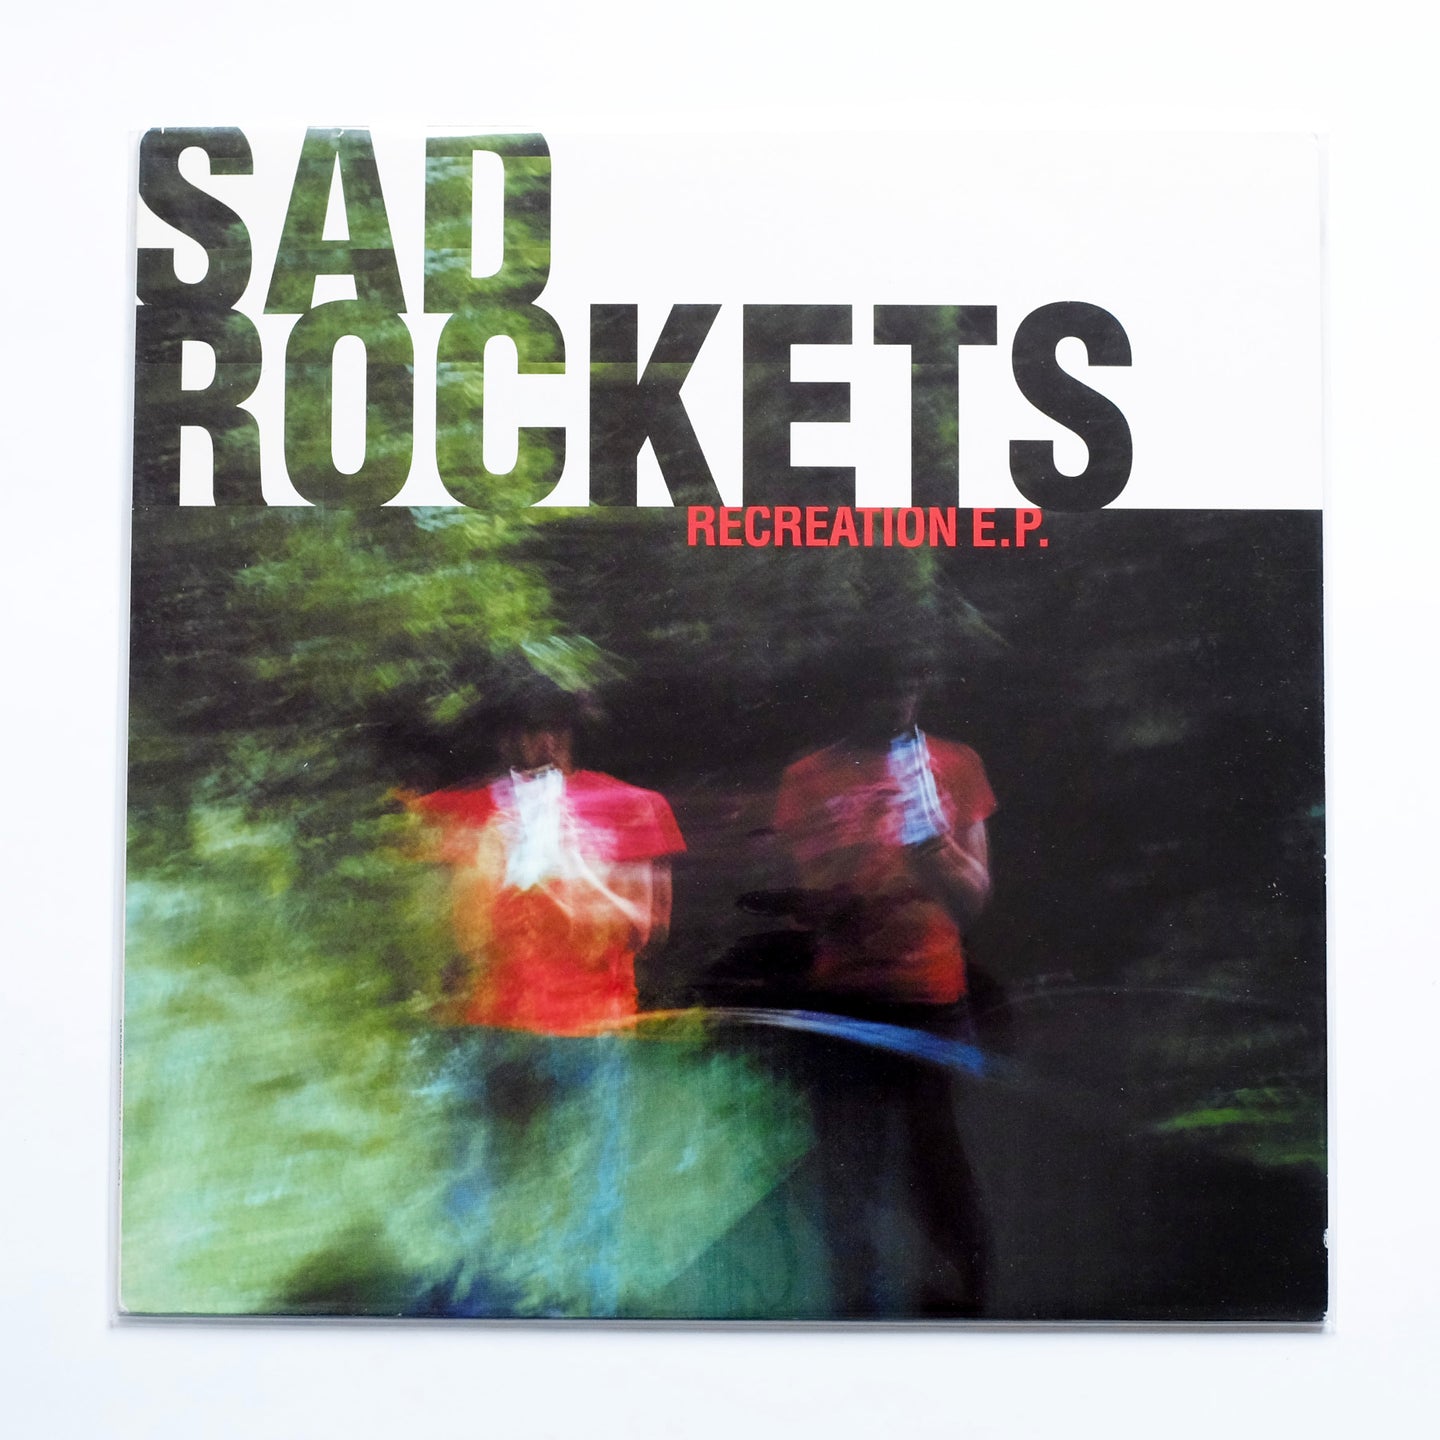 Sad Rockets - Recreation E.P.